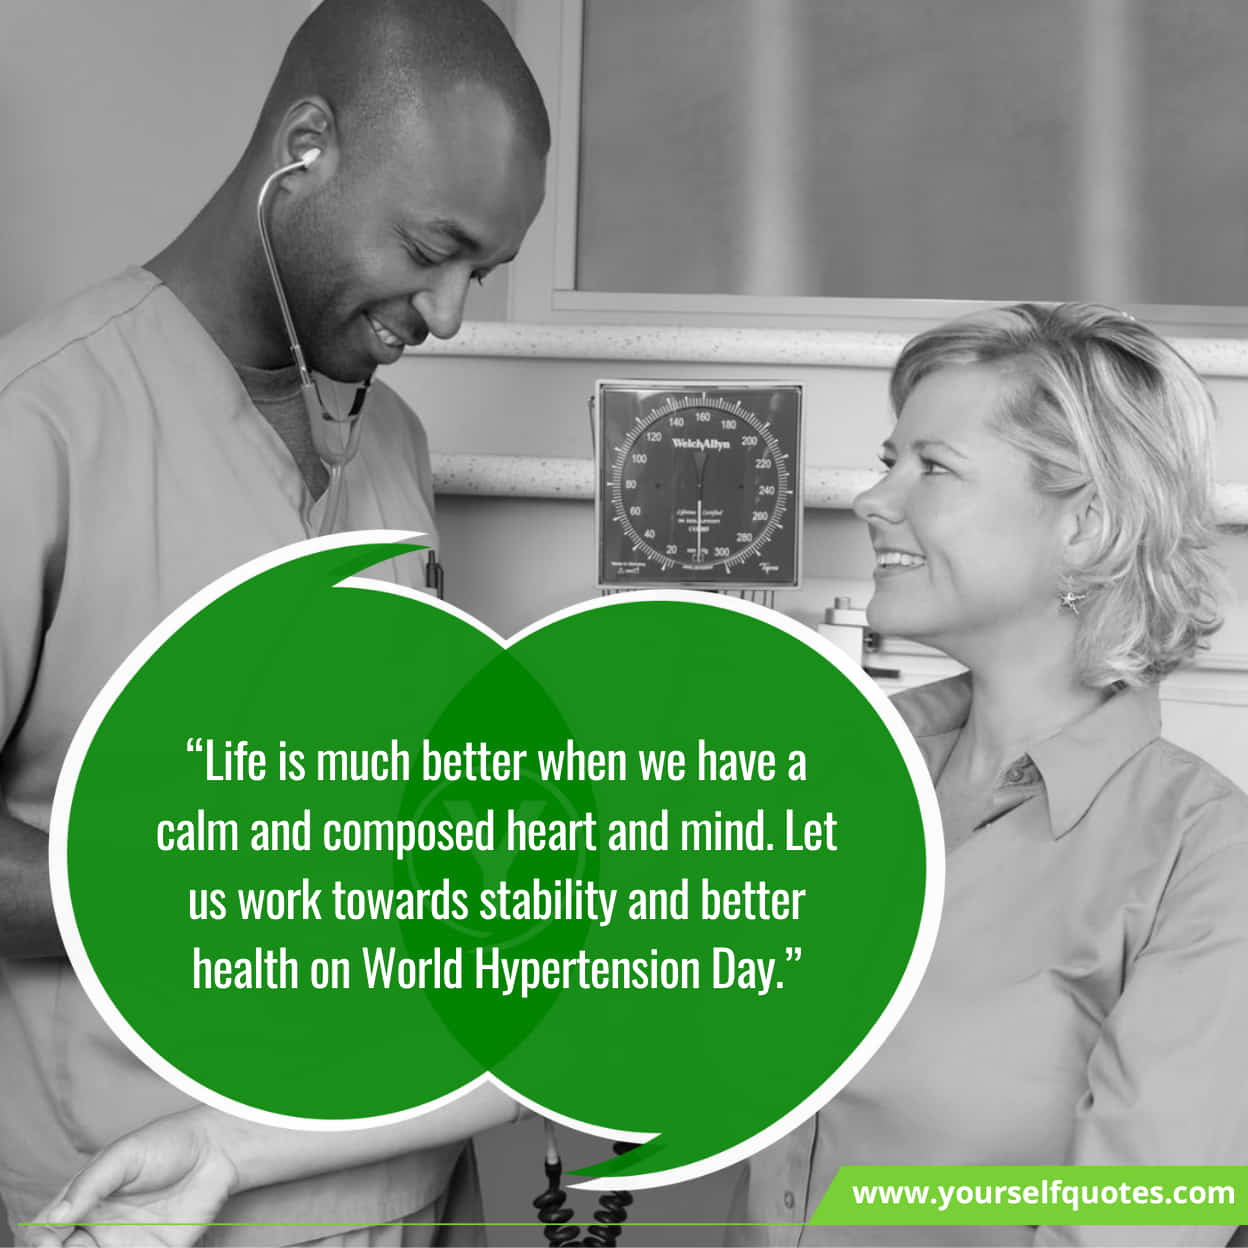 World Hypertension Day Wishes